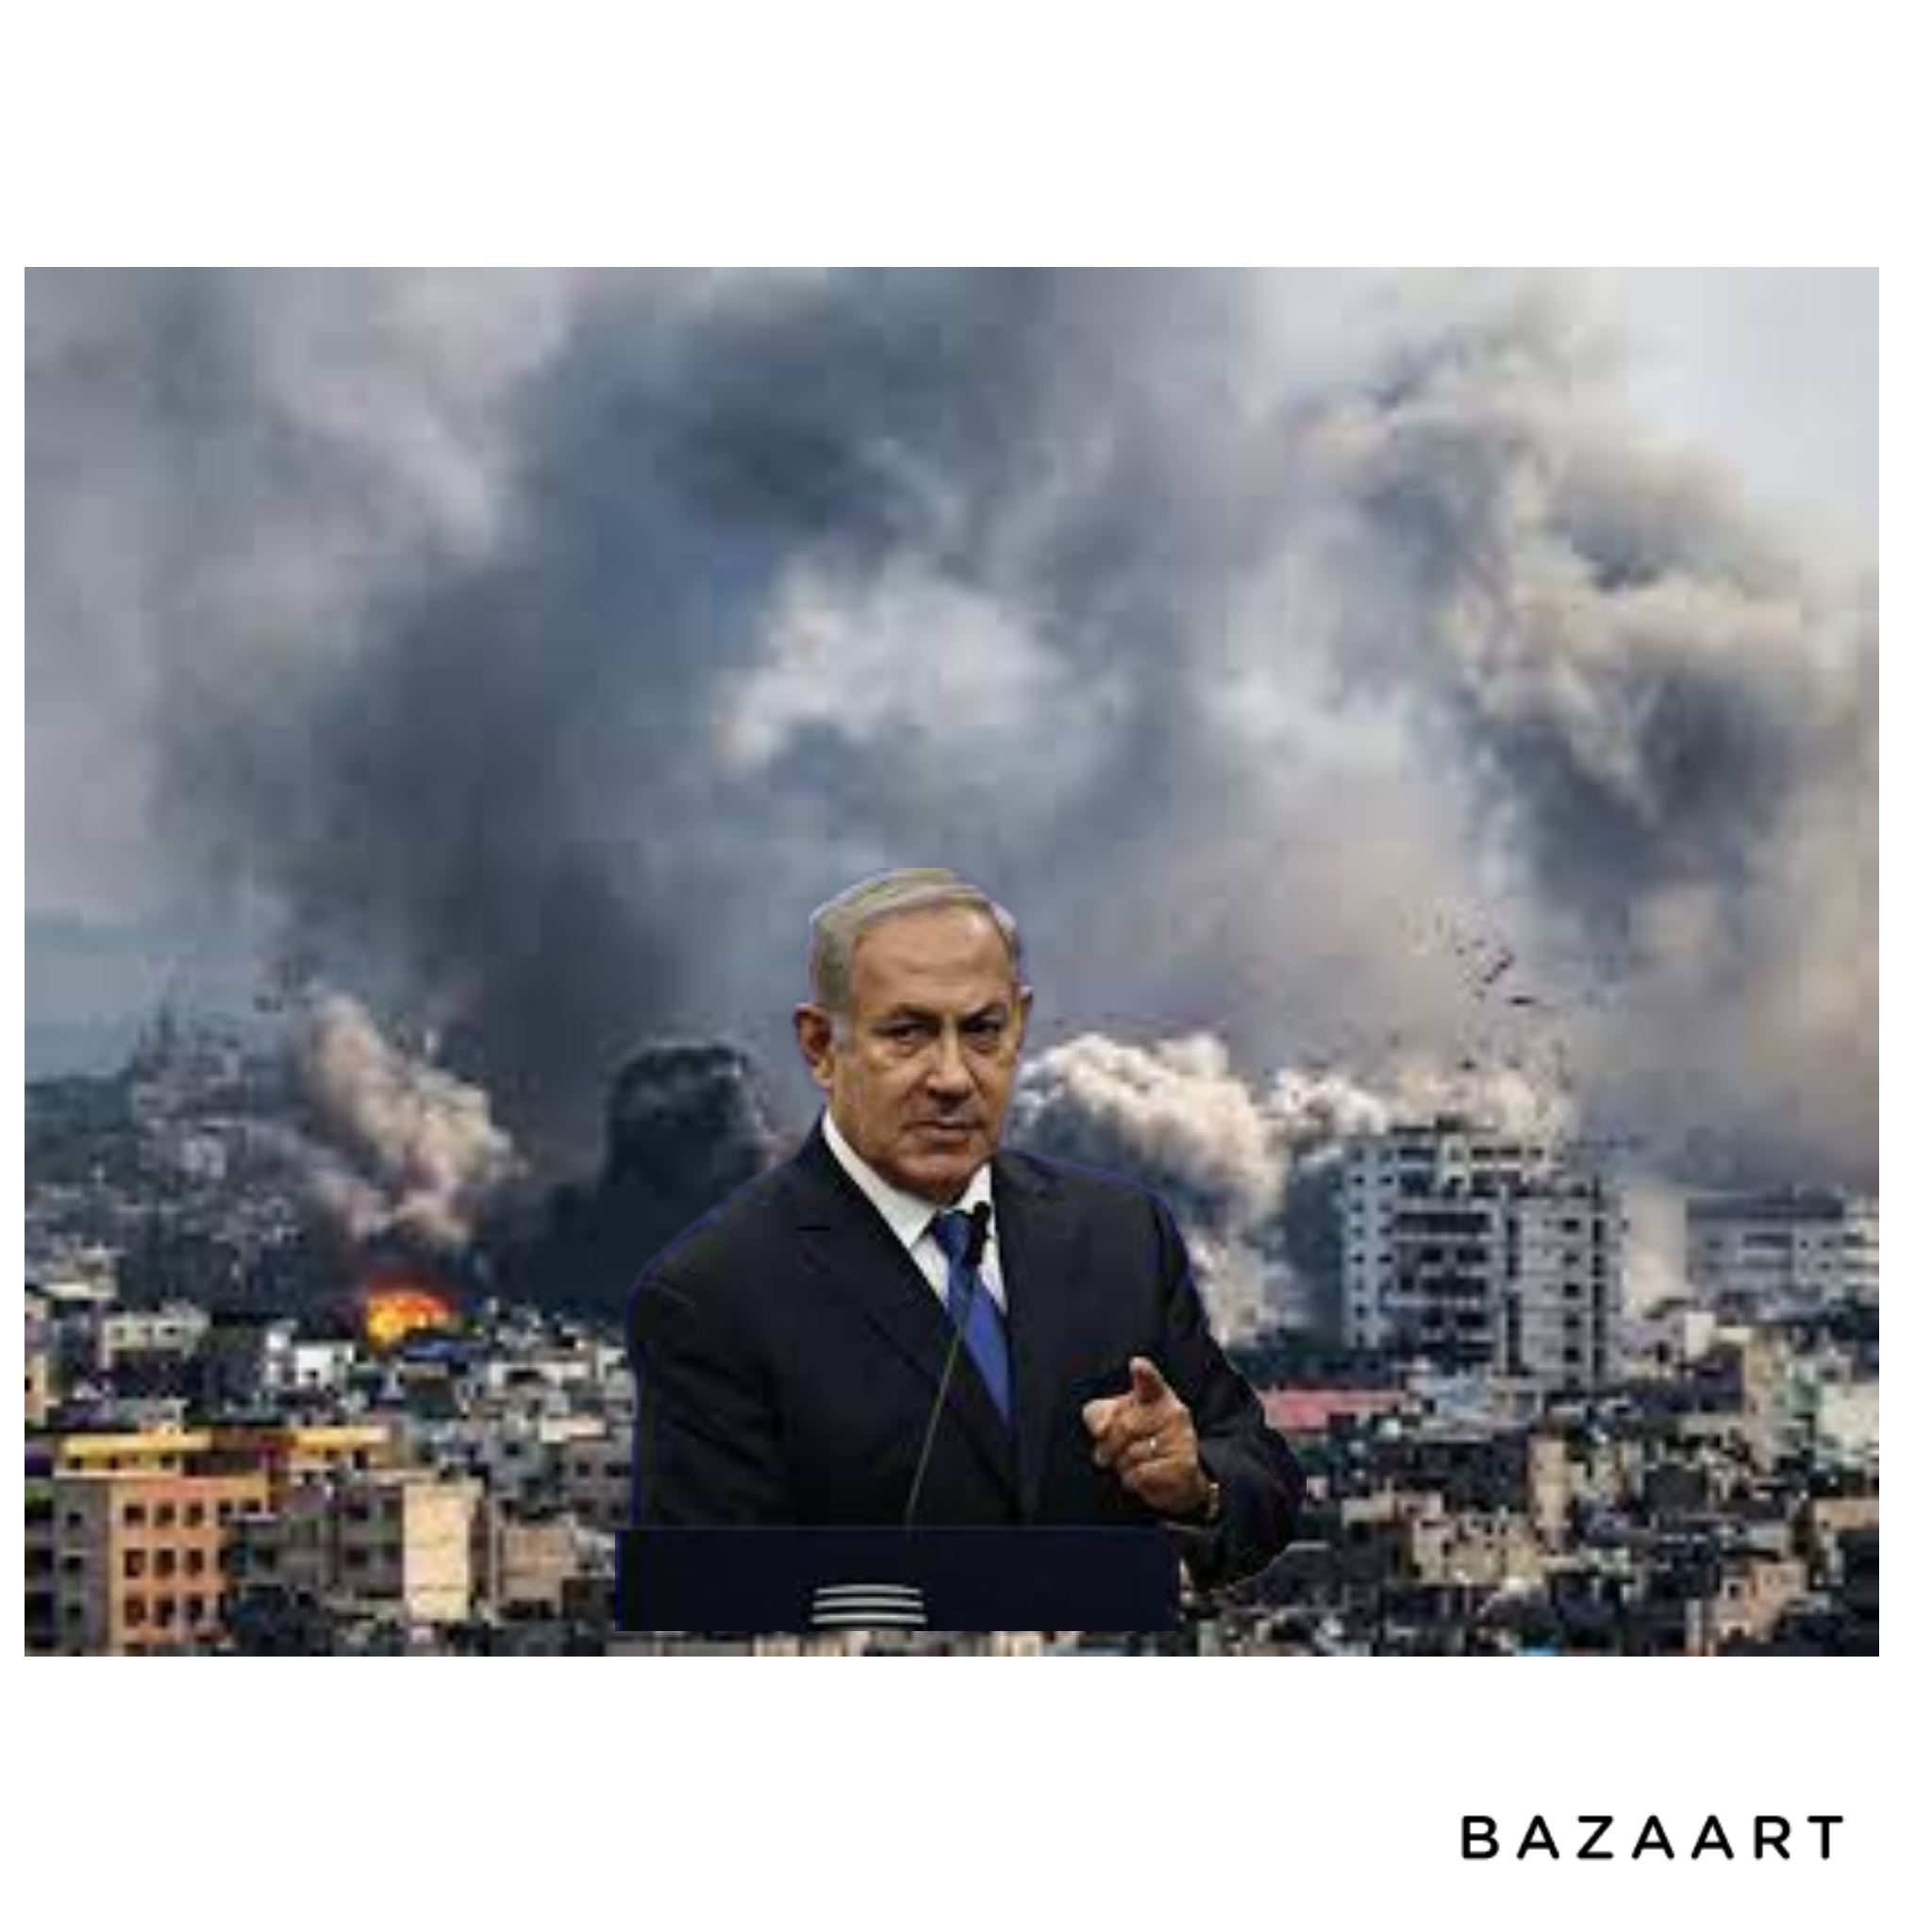 Israeli President, Netanyahu, stands among the bombed buildings of the Gaza Strip